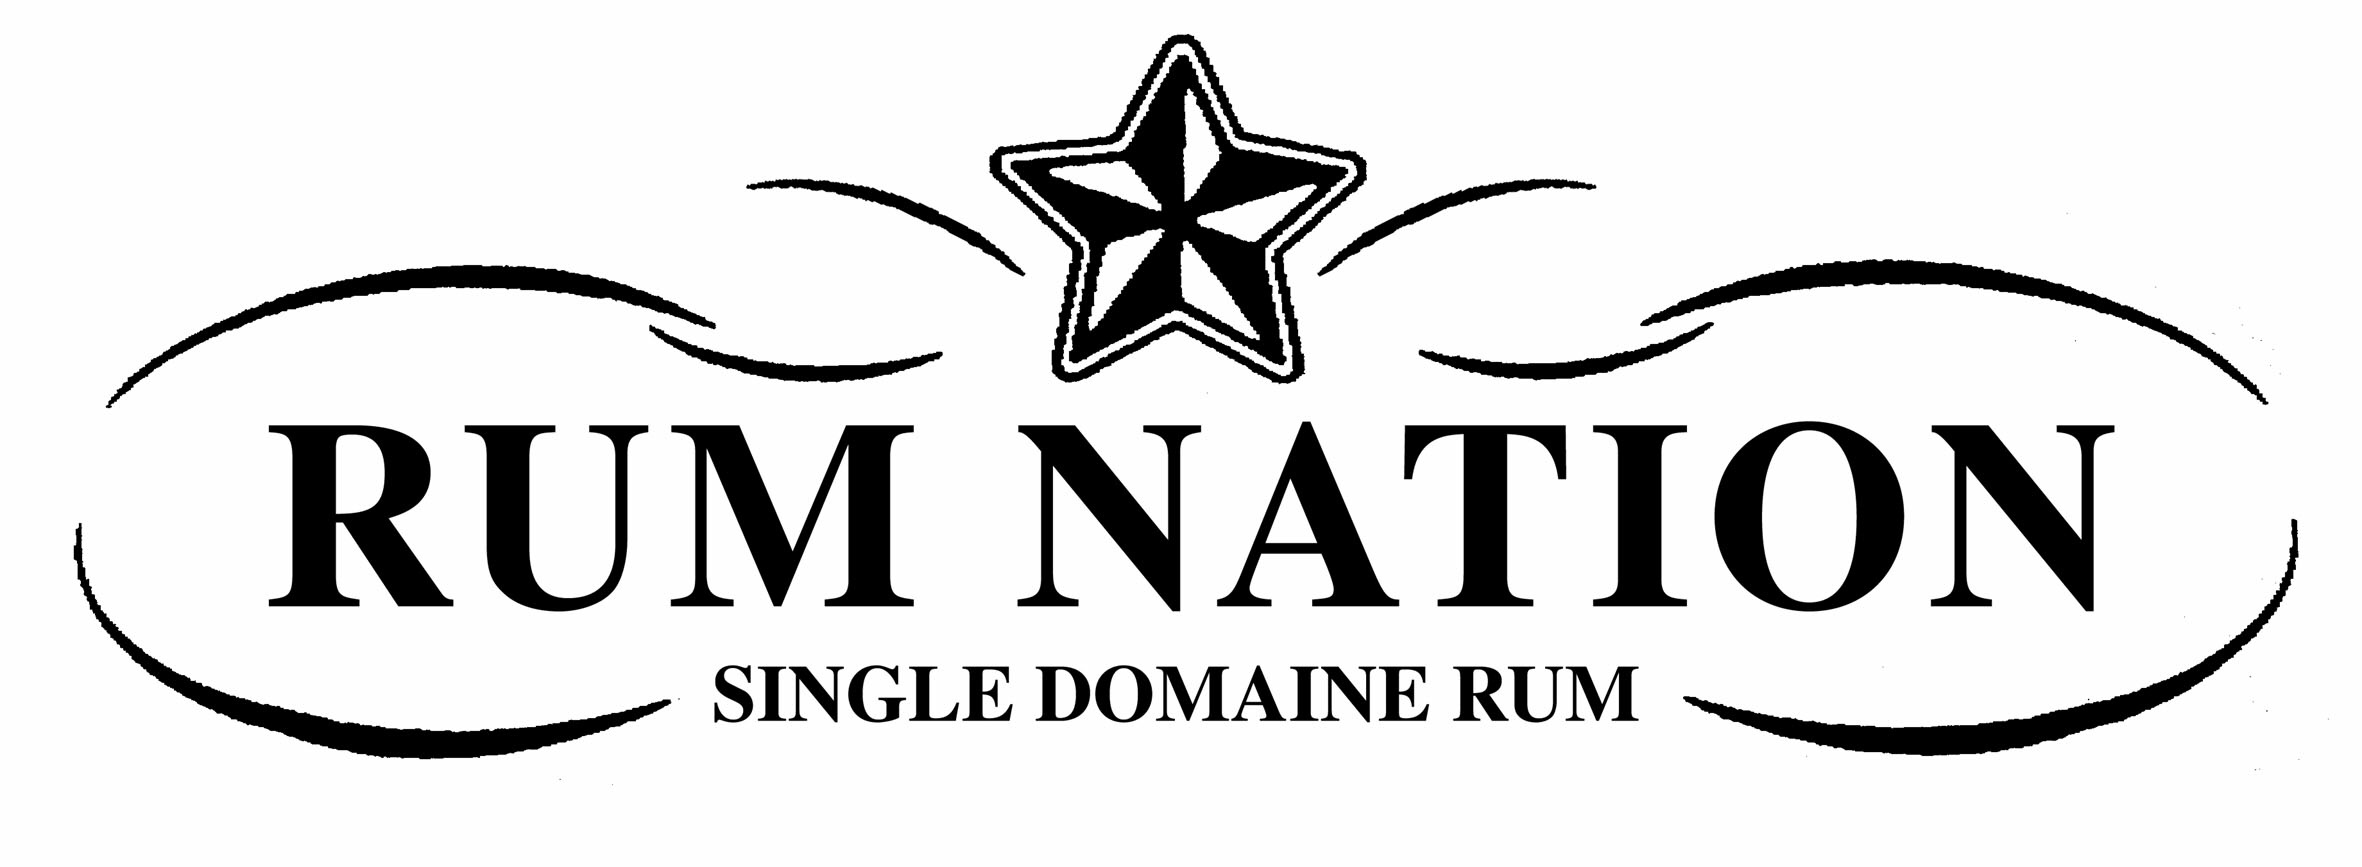 Rum Nation logo